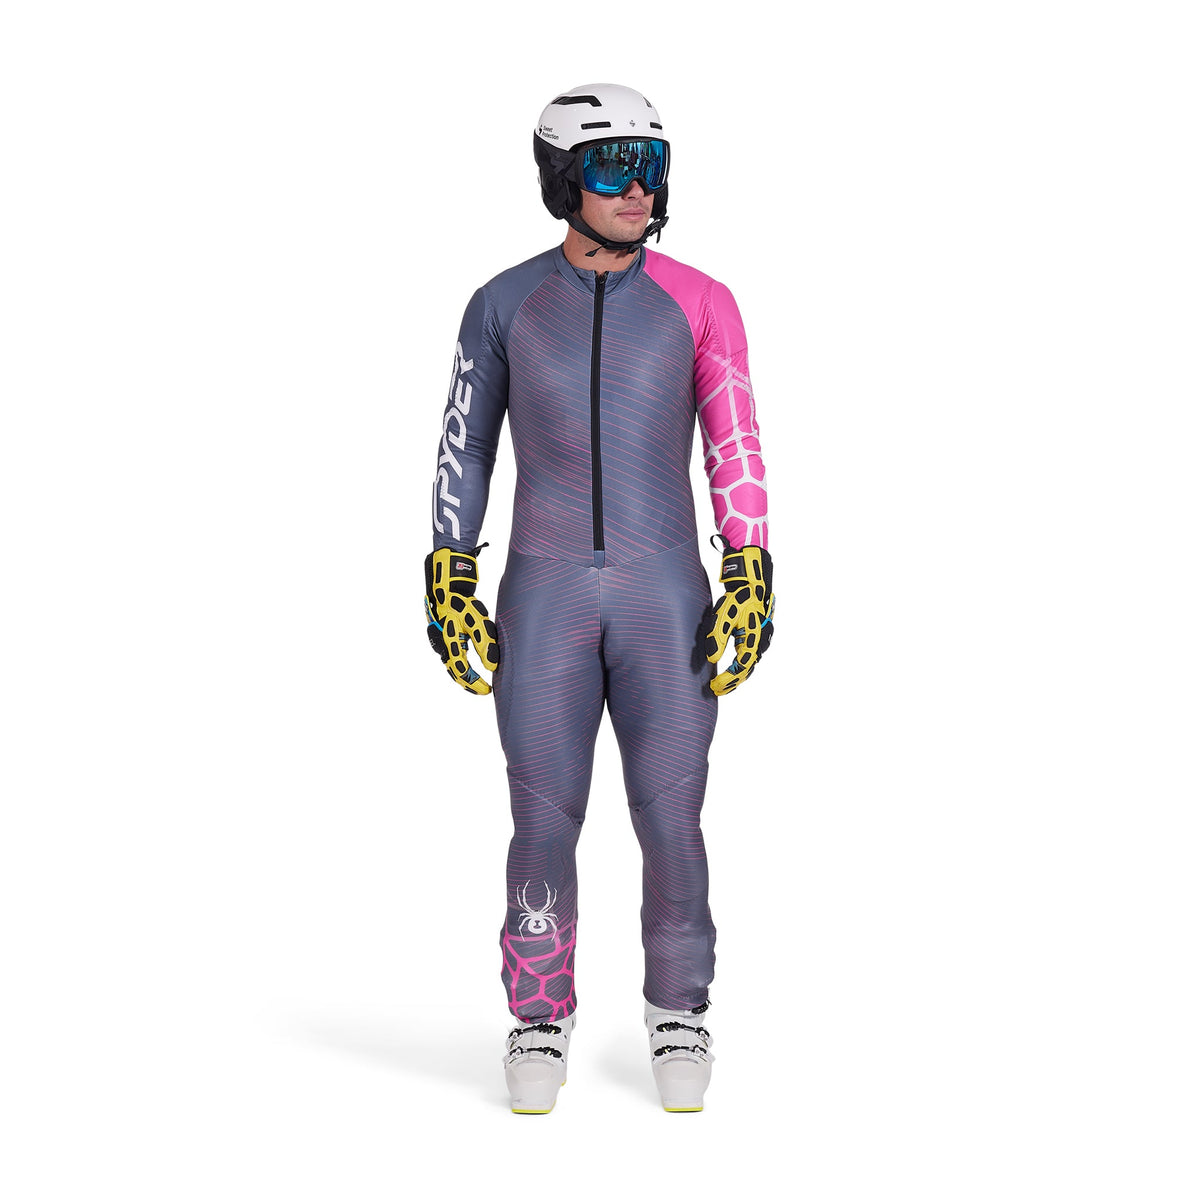 Spyder Performance GS Race Suite Ski Racing Suit Pink